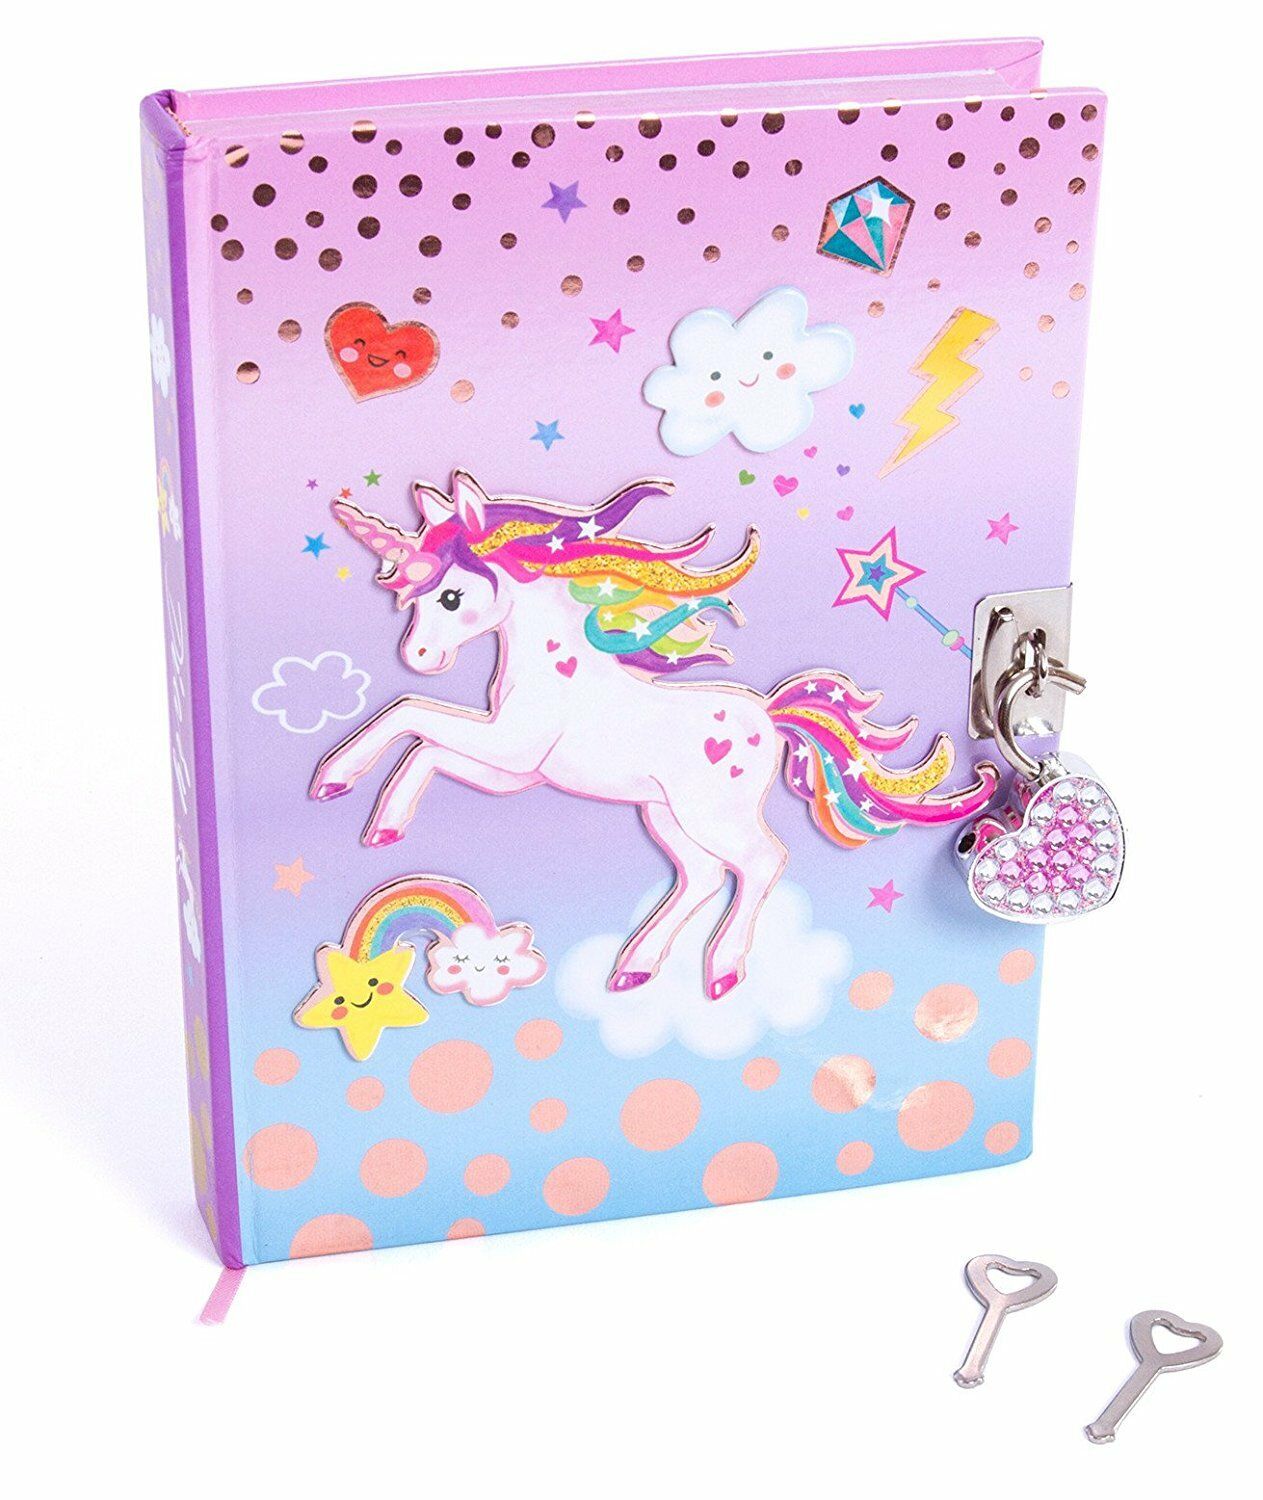 Girls Diary With Lock - 7" Unicorn Kids Secret Diary Journal With Two Keys